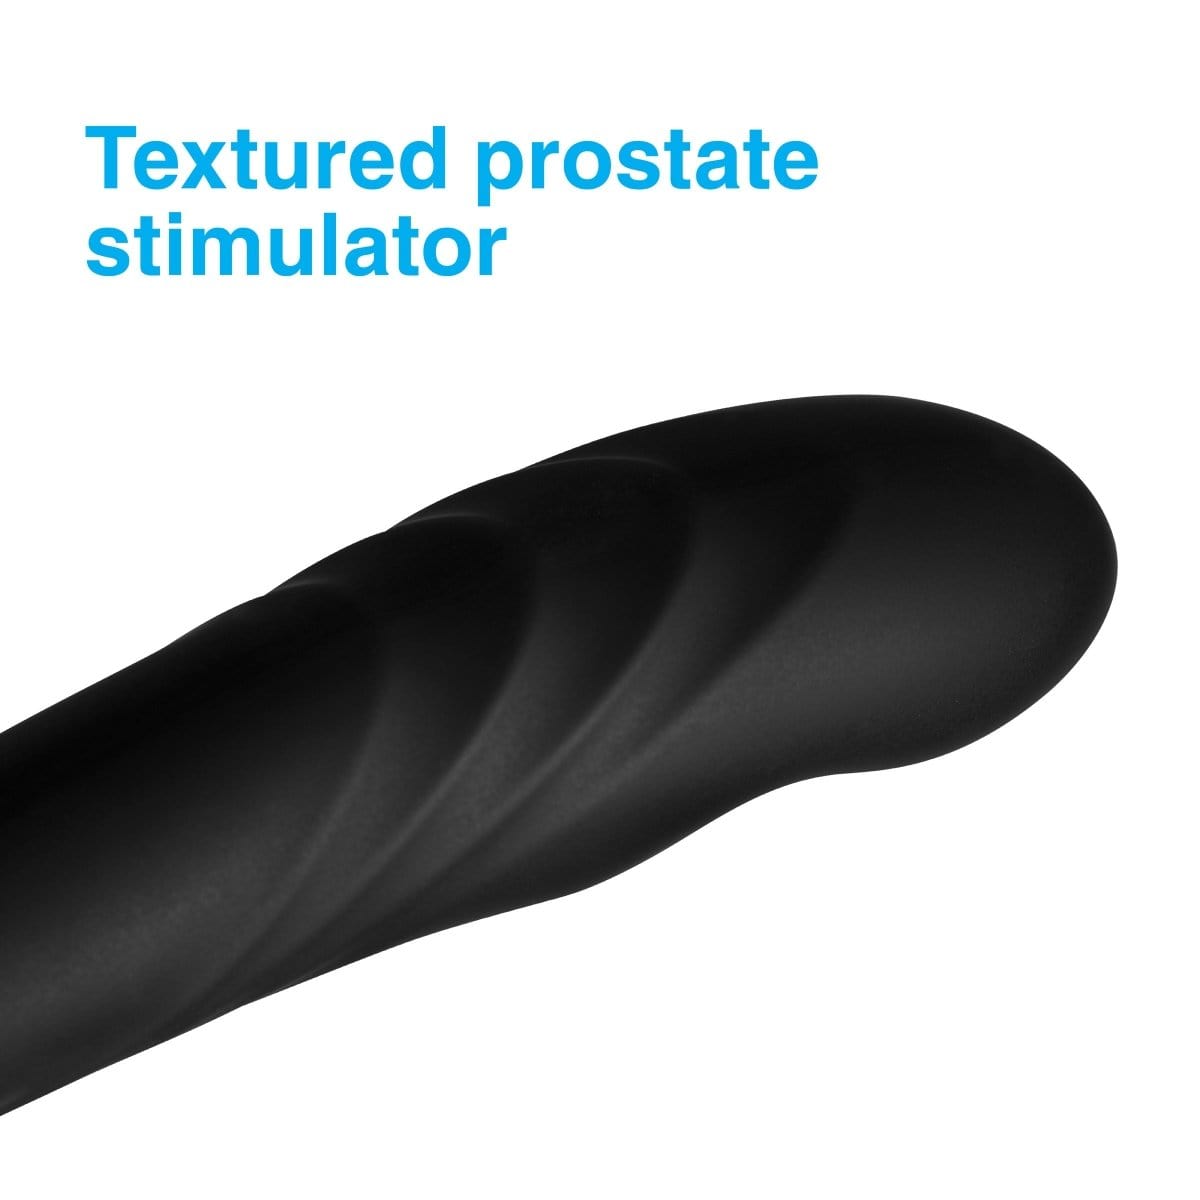 Alpha-Pro Prostate Vibrator Black Alpha-Pro 17X P-TRIGASM 3-in-1 Silicone Prostate Stimulator at the Haus of Shag